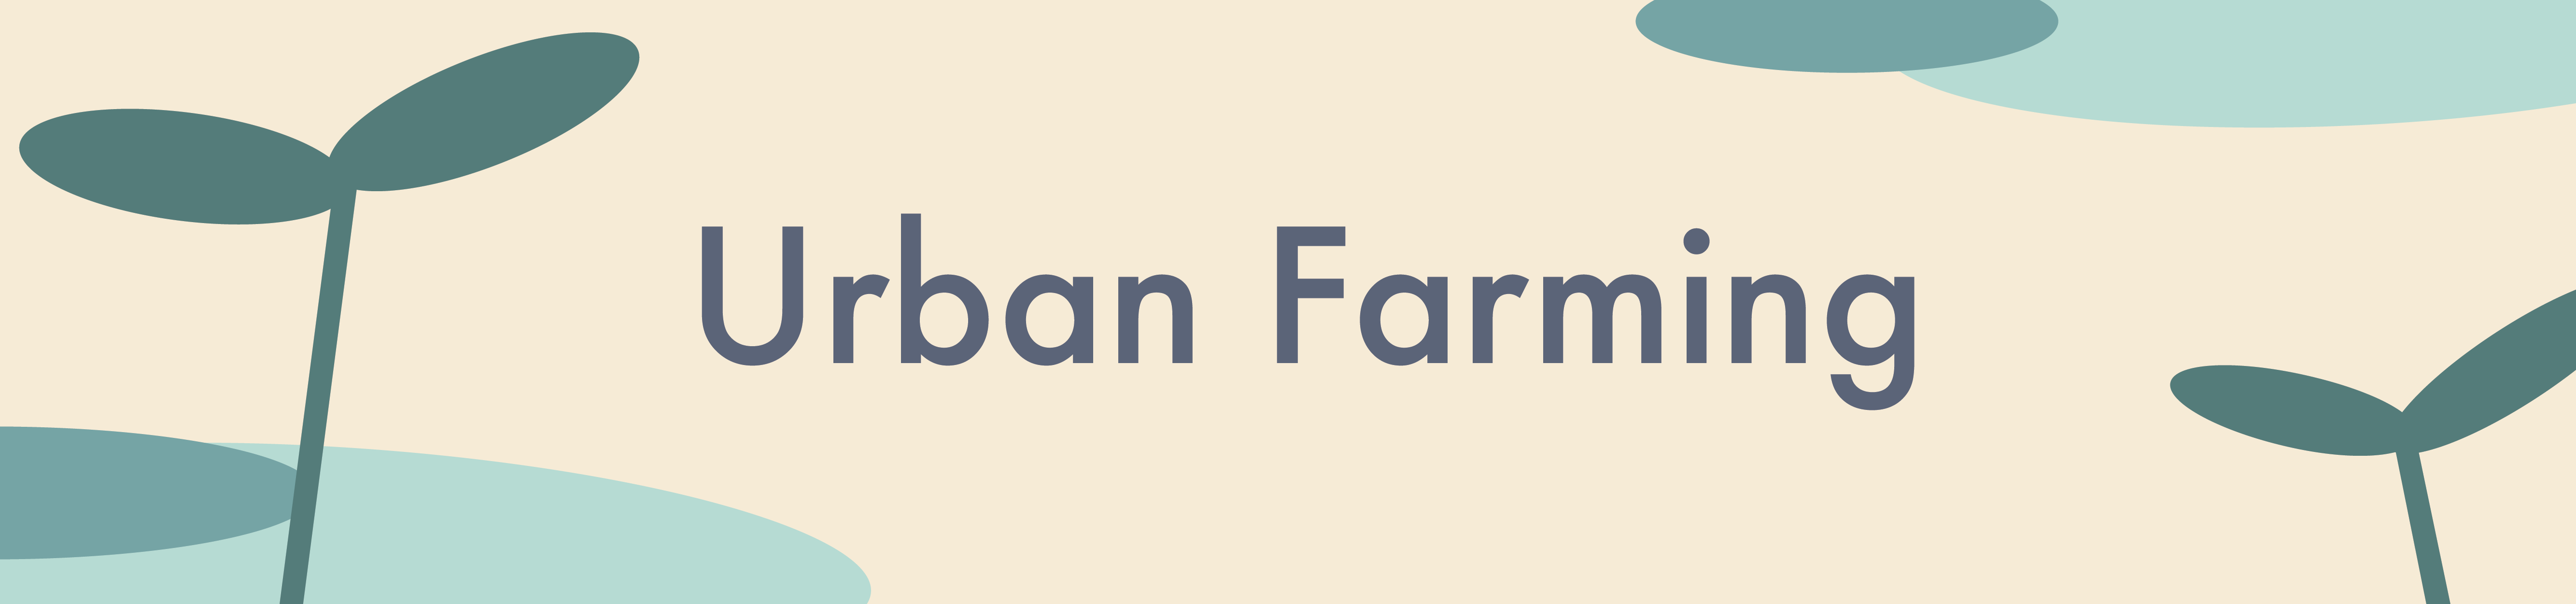 Urban Farming header